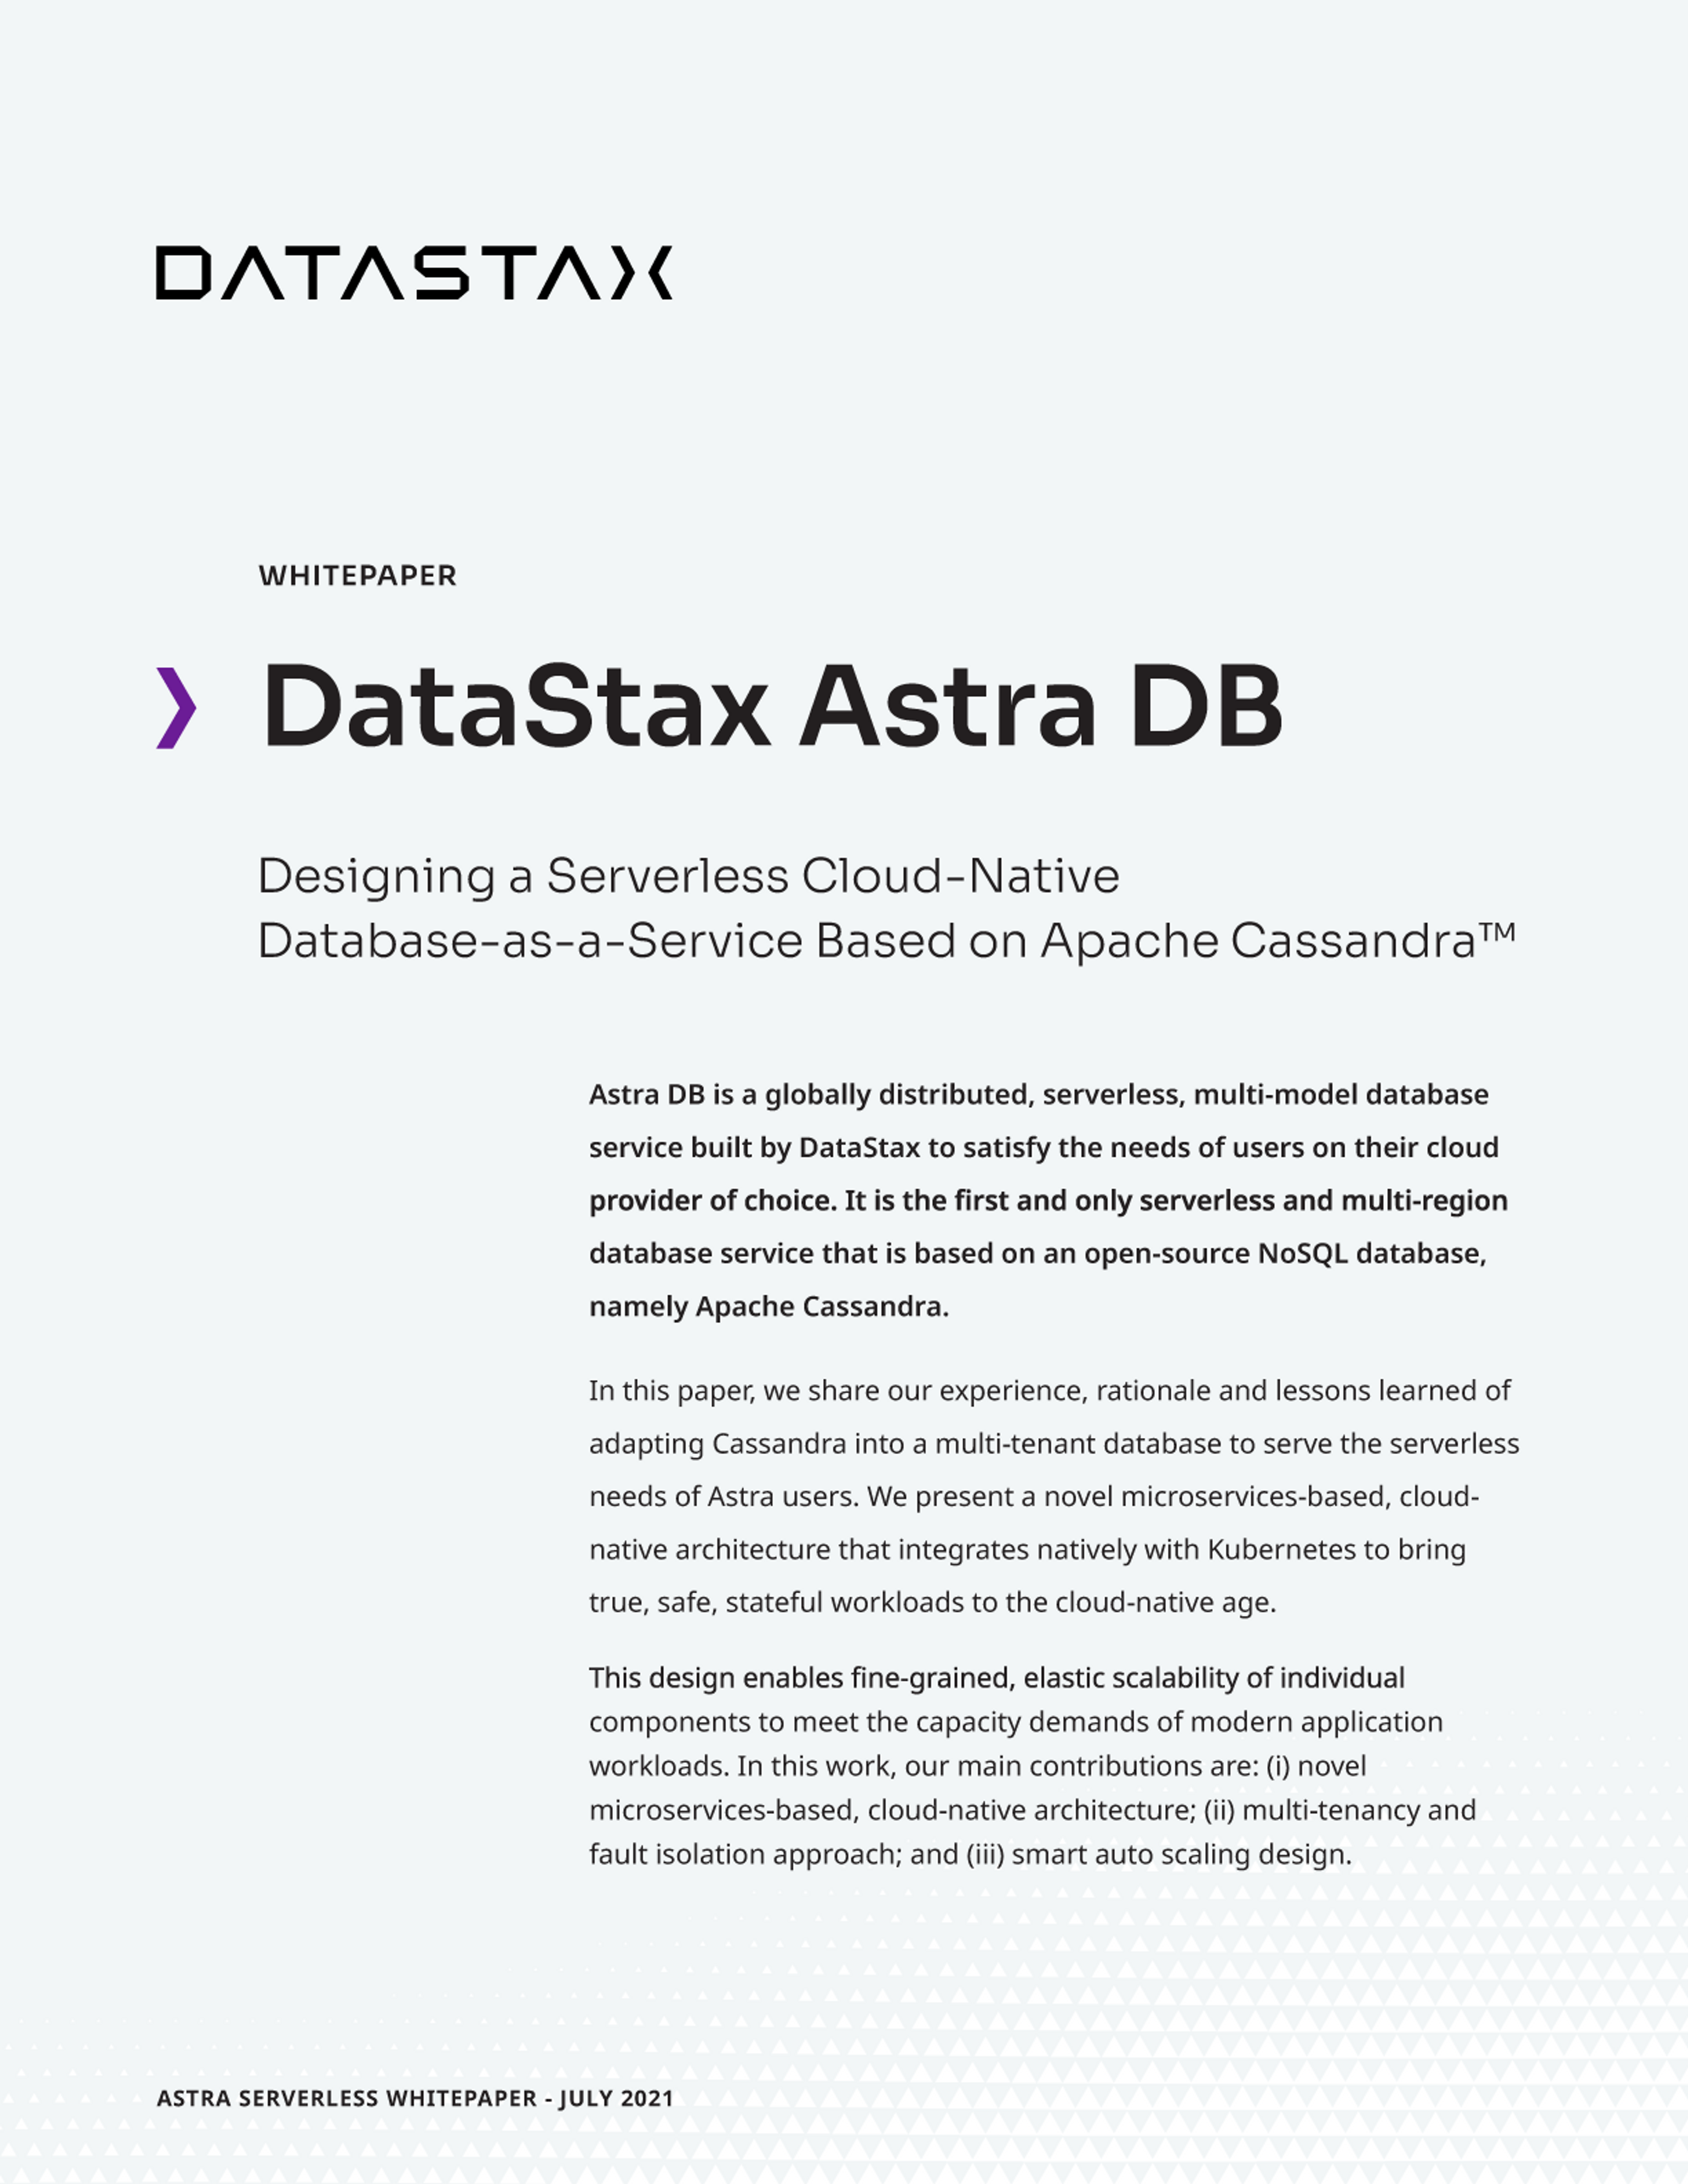 Astra DB: Designing A Serverless Cloud-Native DBaaS